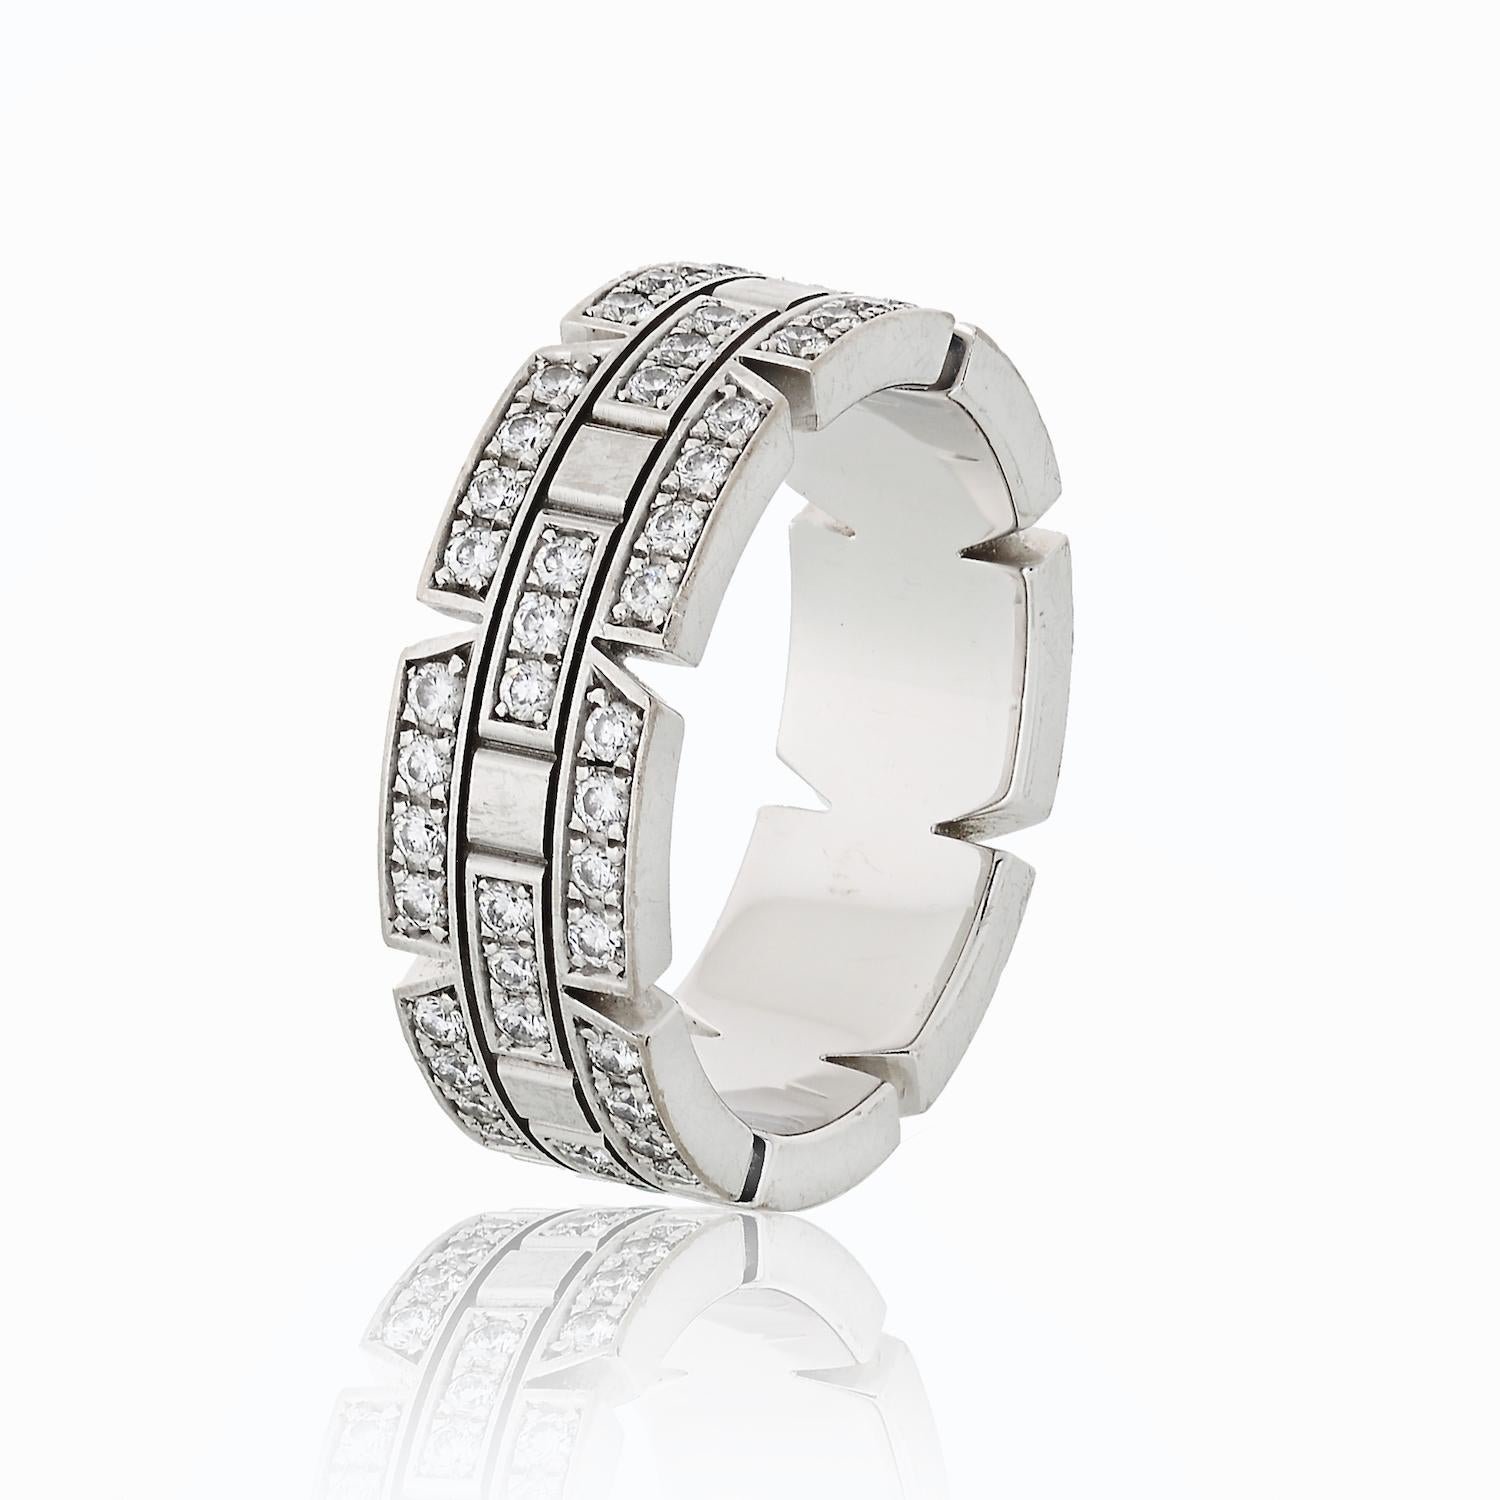 Modern Cartier Tank Francaise Diamond Ring in White Gold